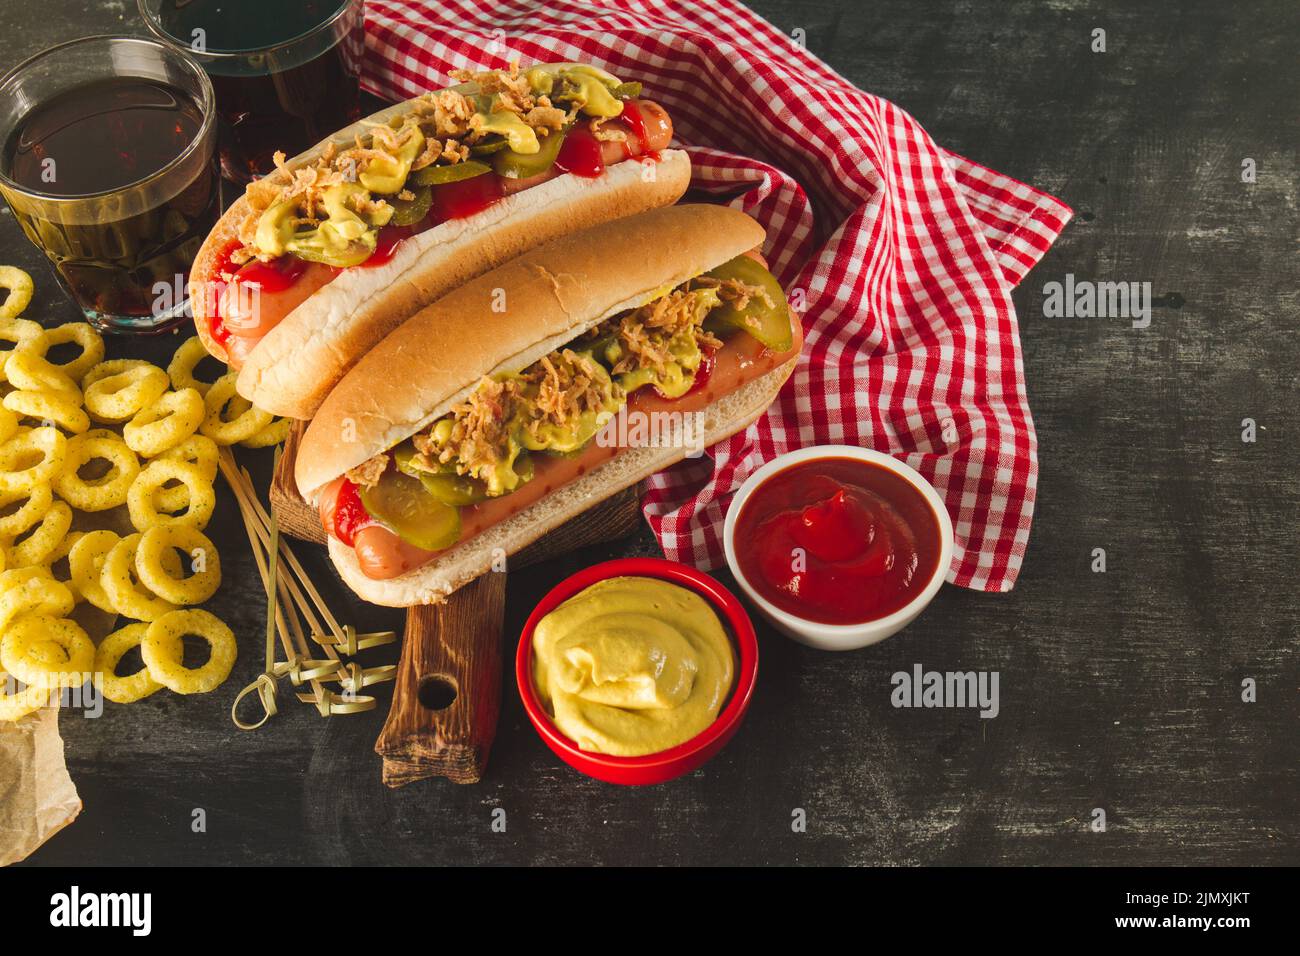 Holzoberfläche mit köstlichem Fast Food-Menü Stockfoto